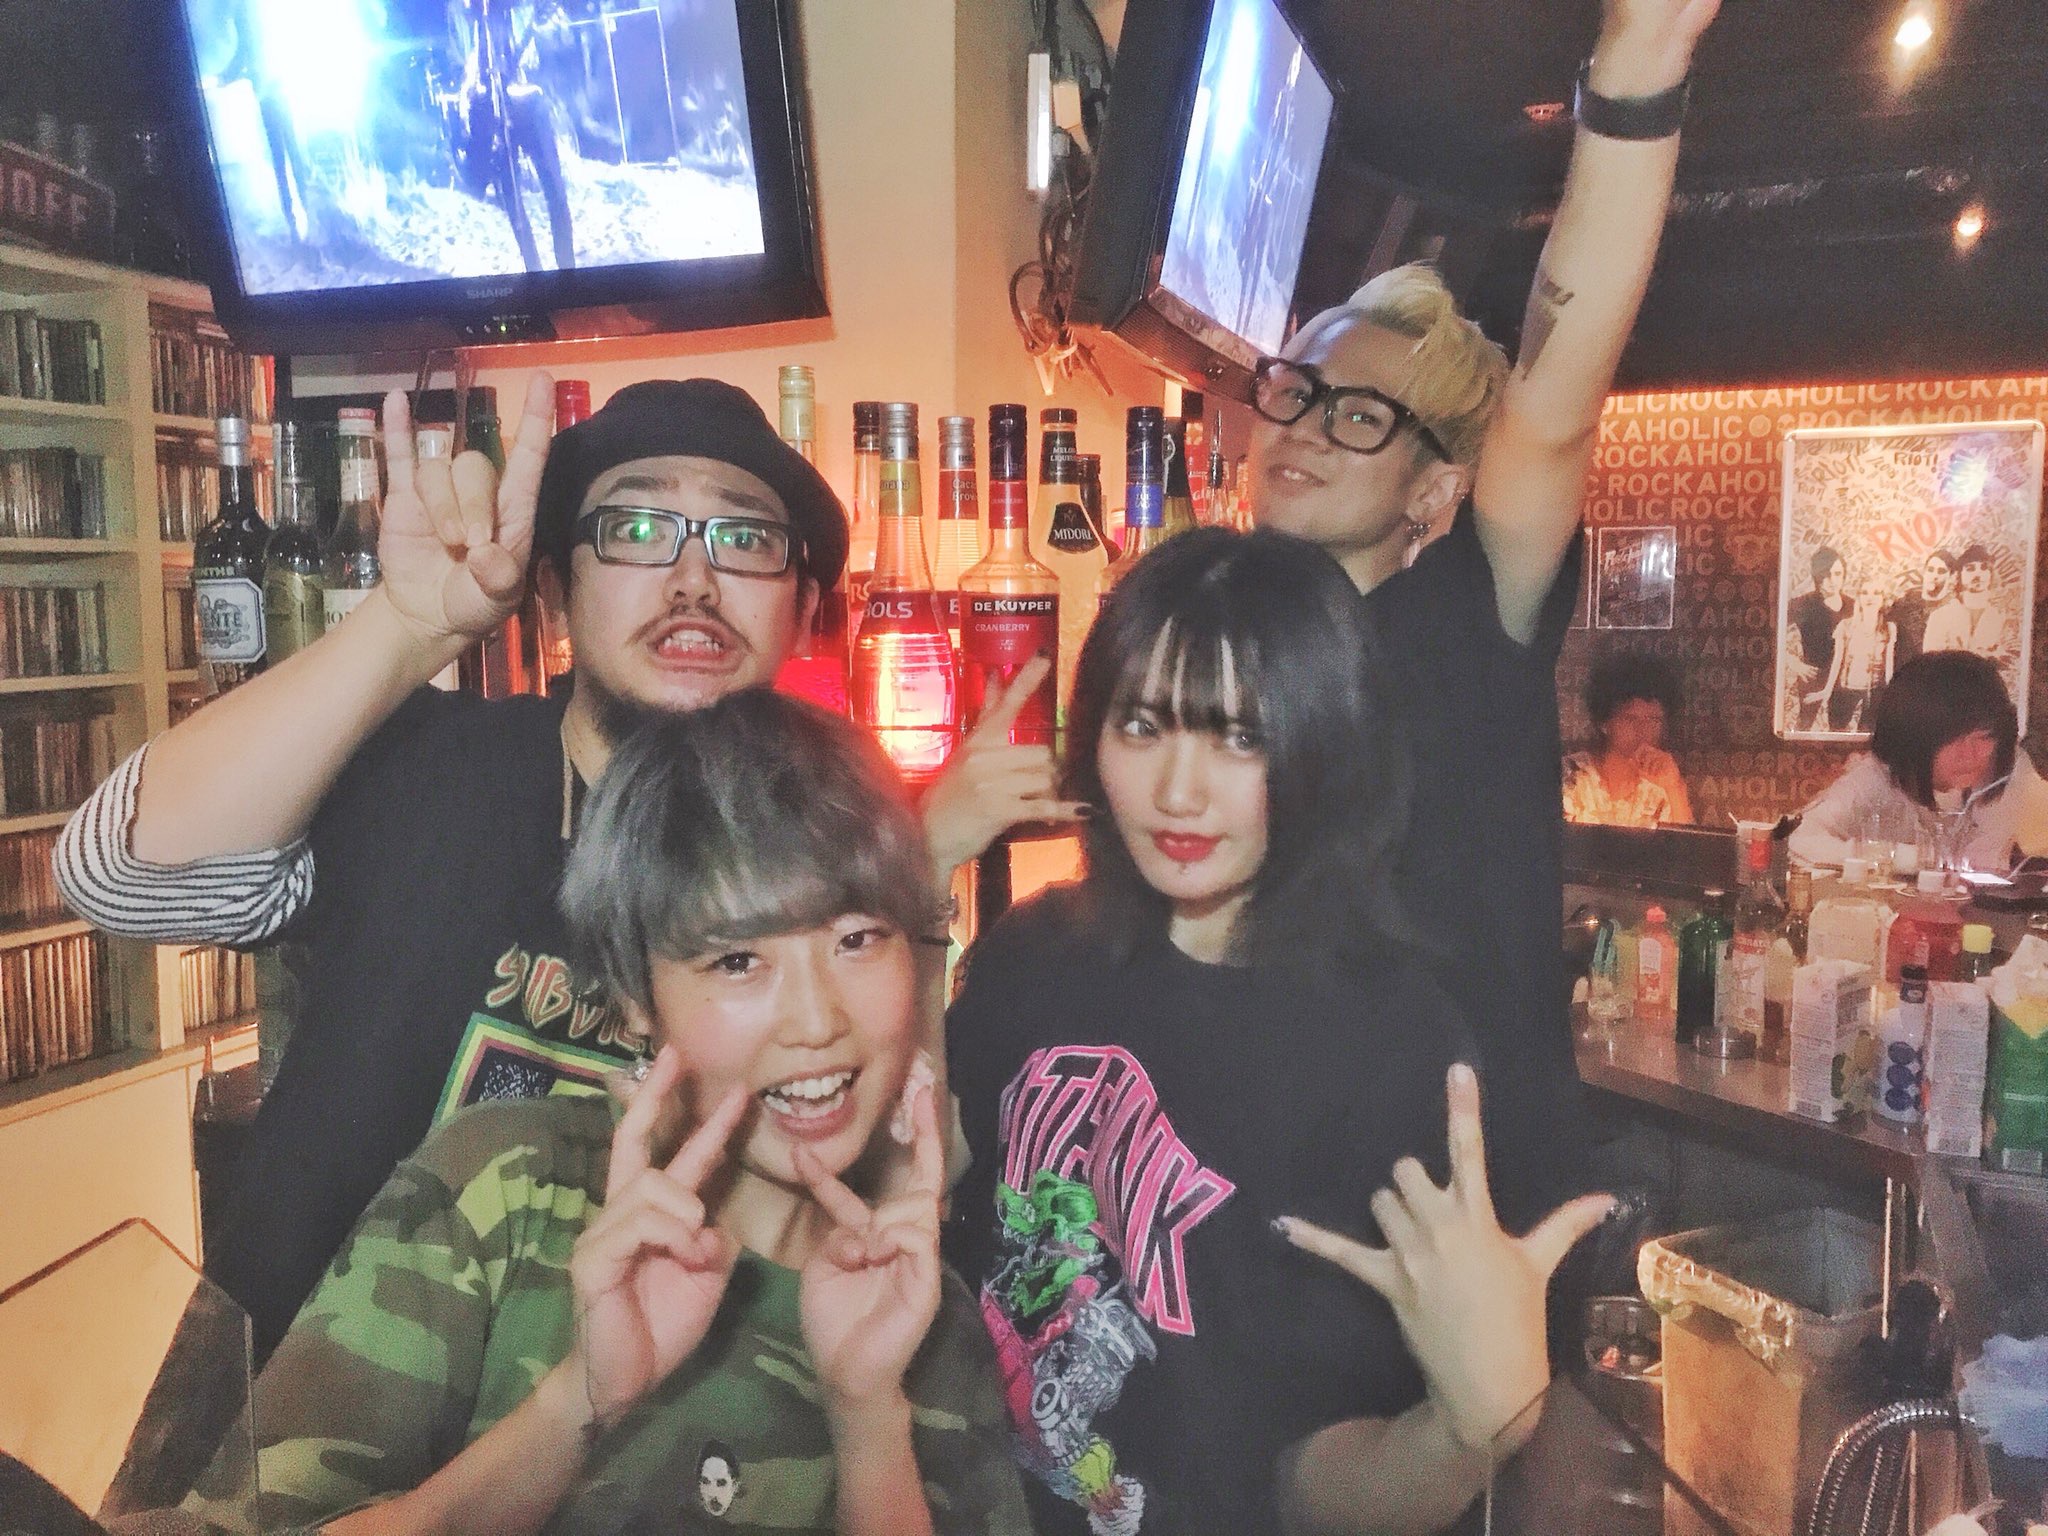 https://bar-rockaholic.jp/shibuya/blog/223915D5-4DBE-422D-AD93-D428555BF4C3.jpeg